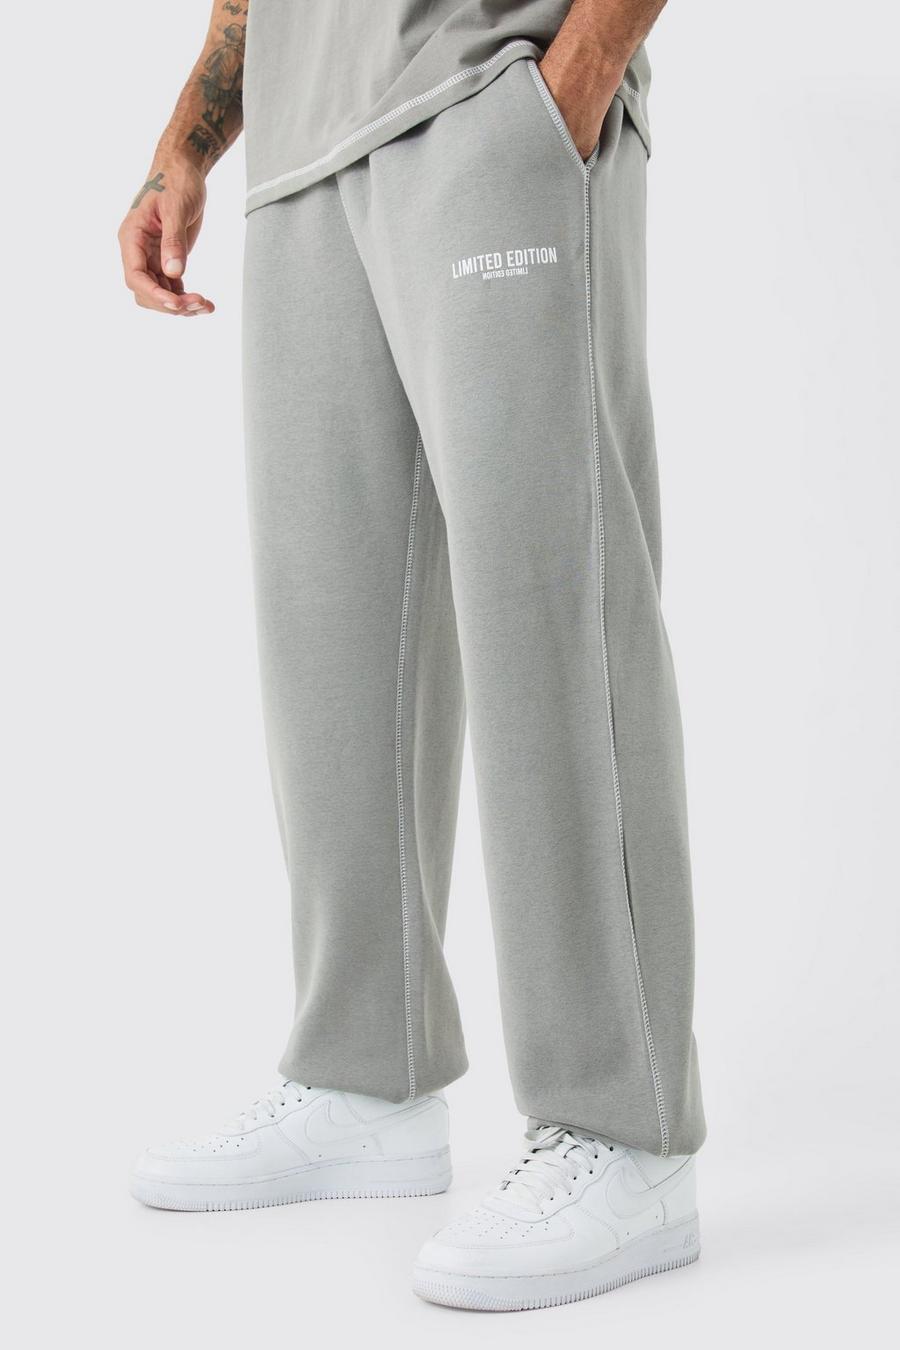 Pantalón deportivo oversize Limited Edition con costuras en contraste, Charcoal